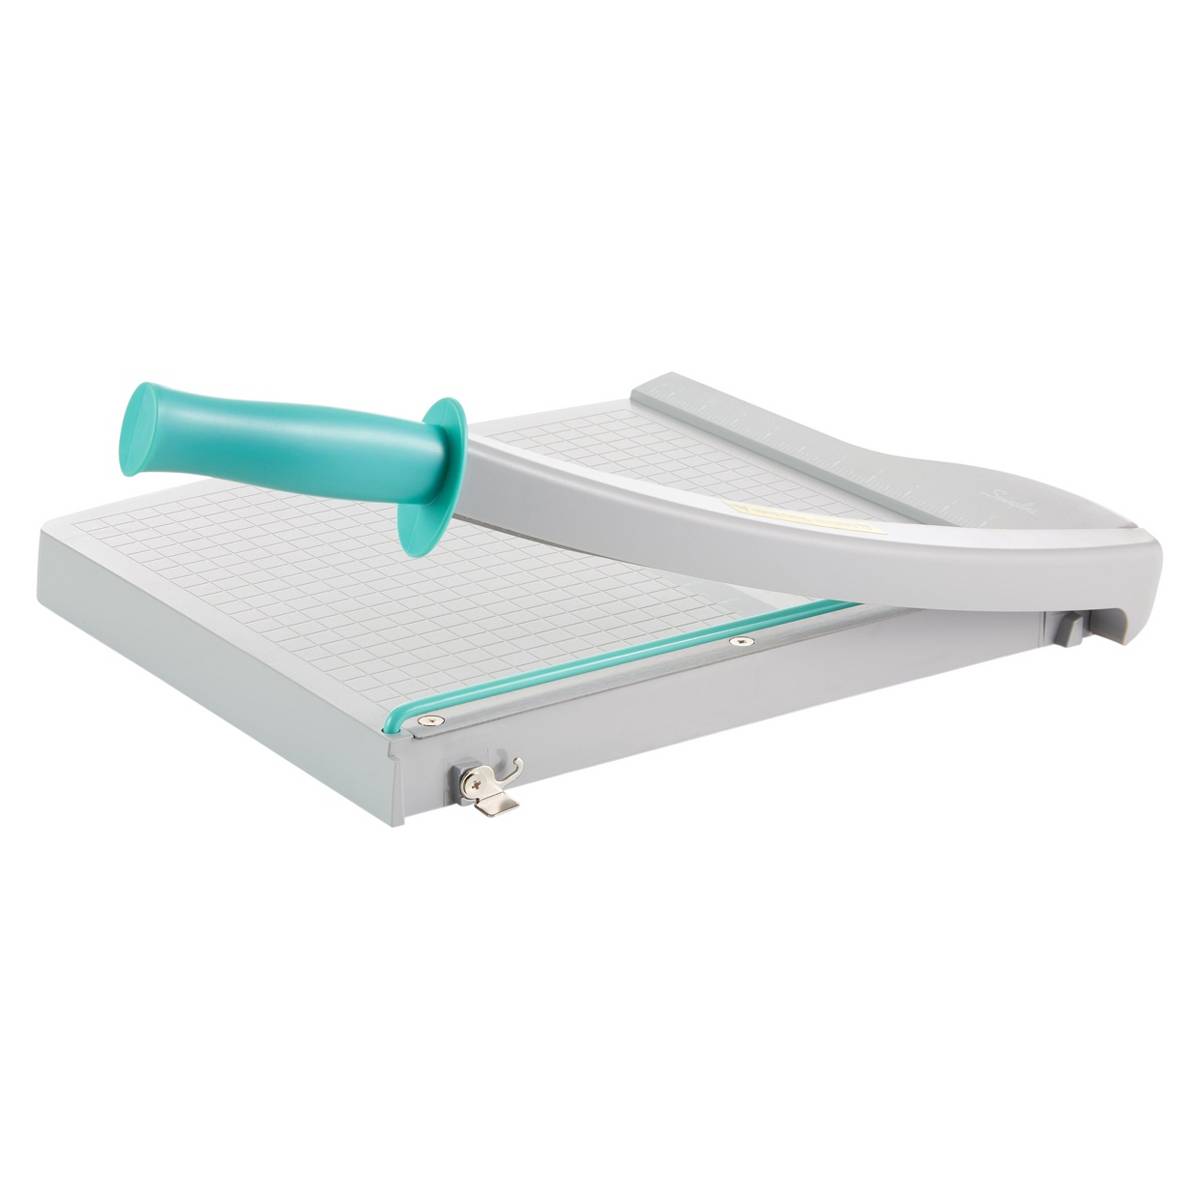 Paper cutter trimmer blade sharpening service